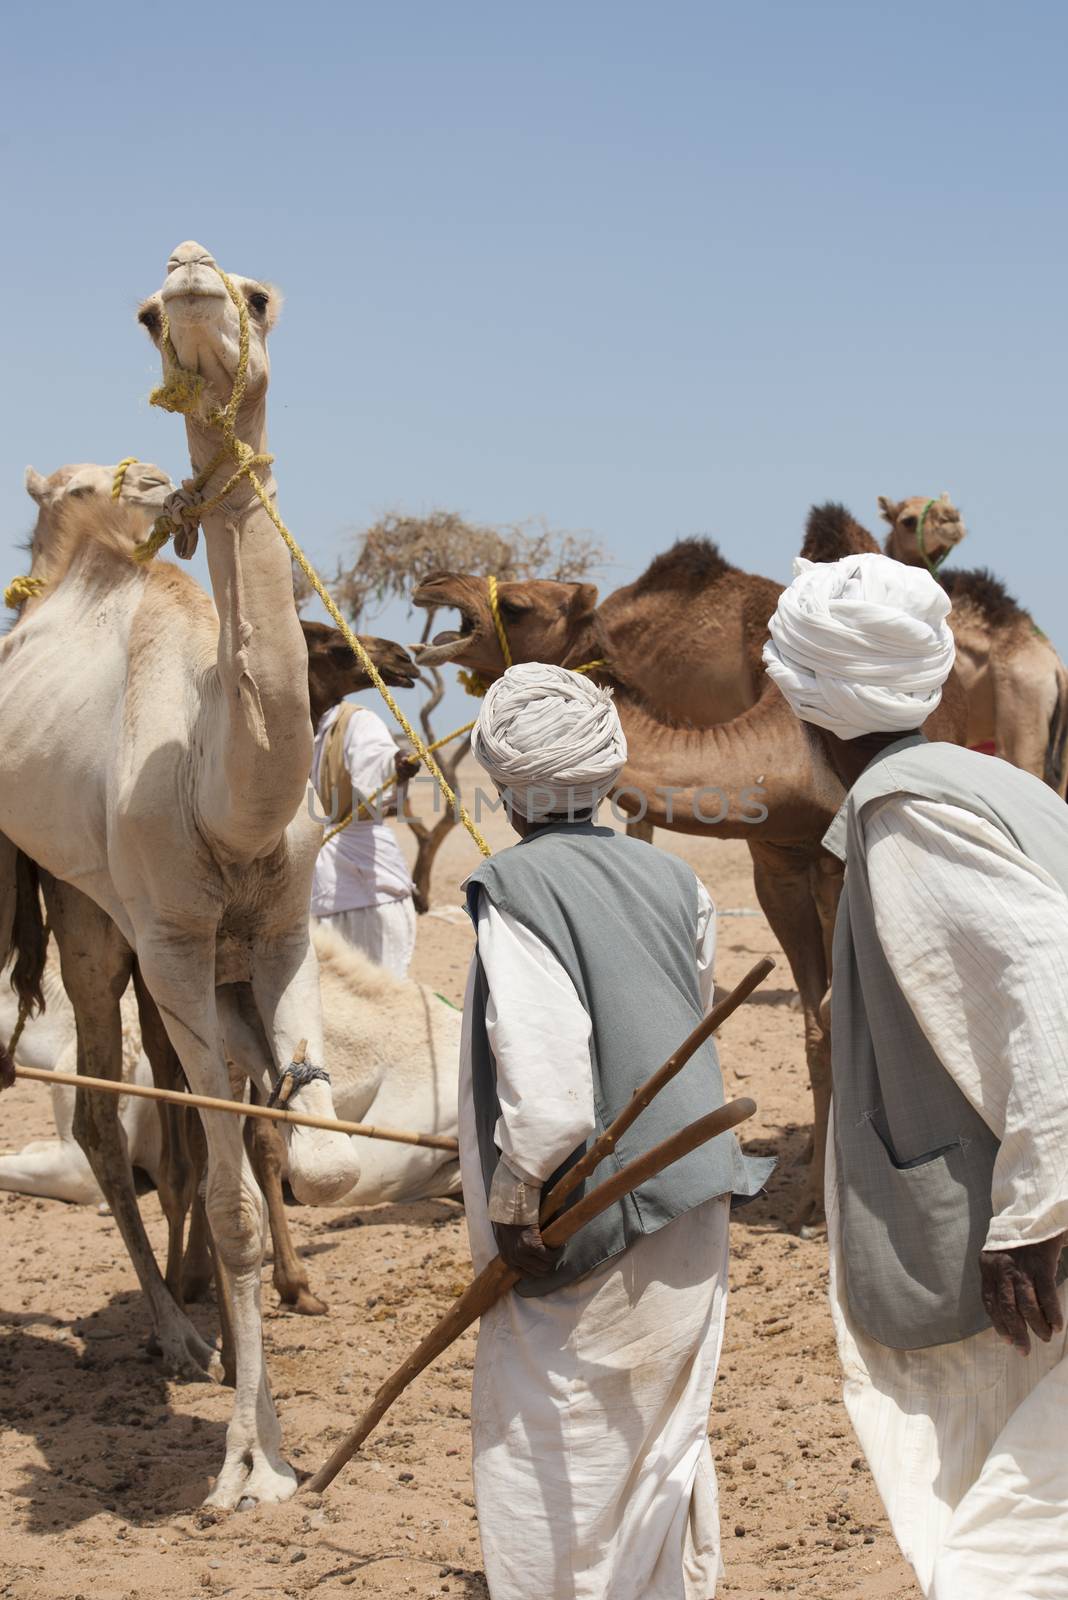 Bedouin traders at a camel market by paulvinten